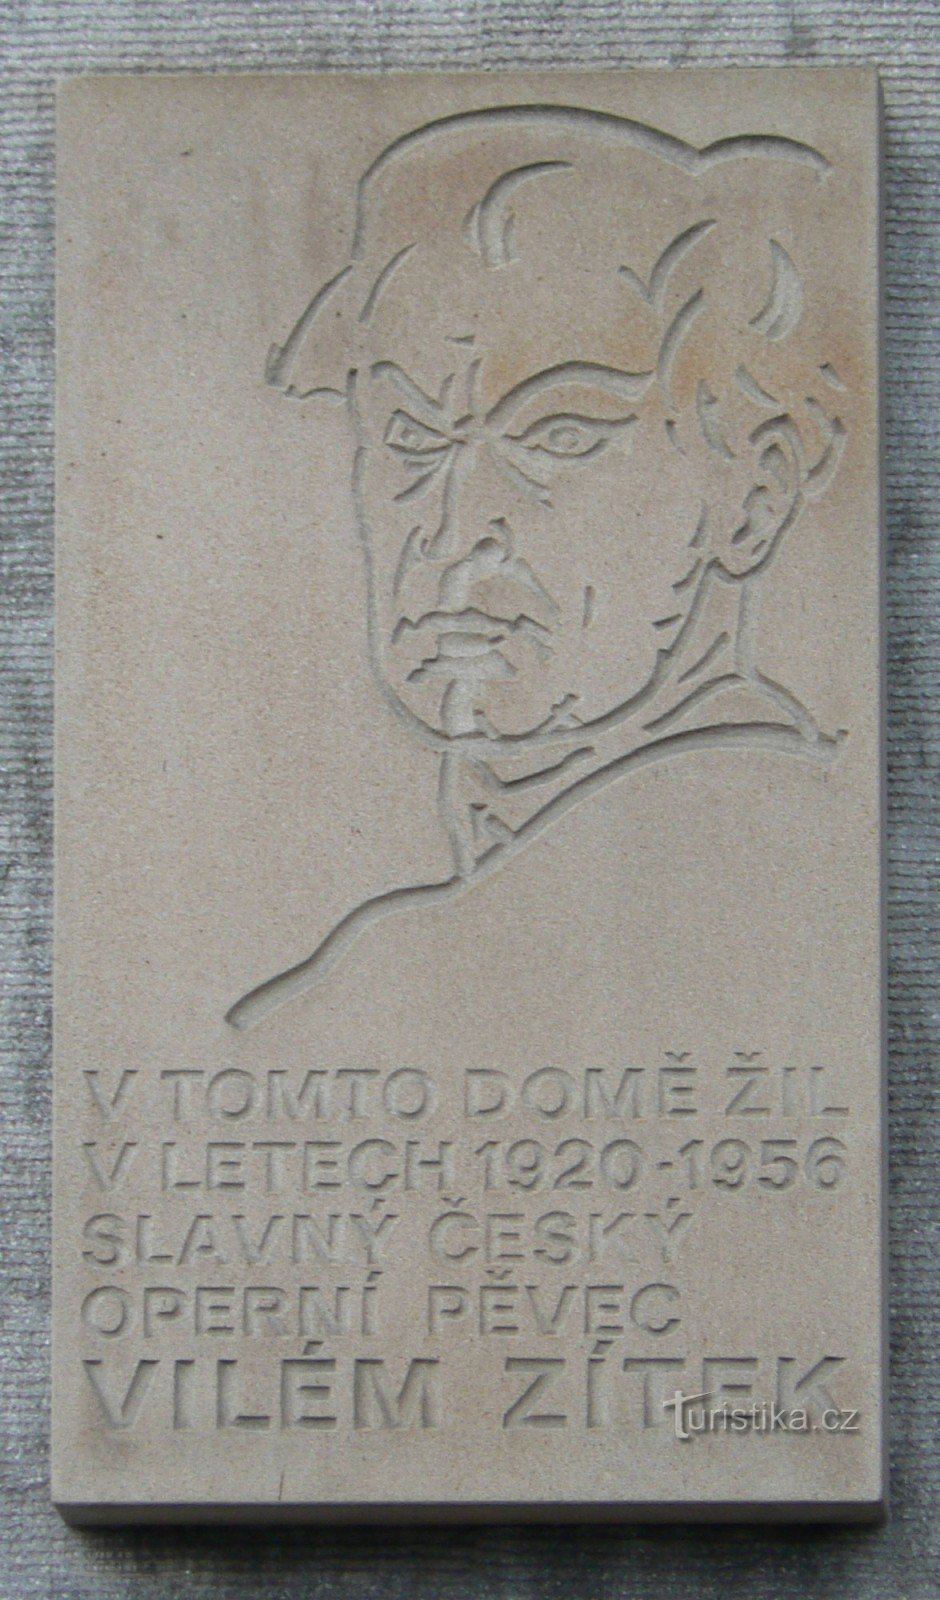 Placa comemorativa de Vilém Zítek